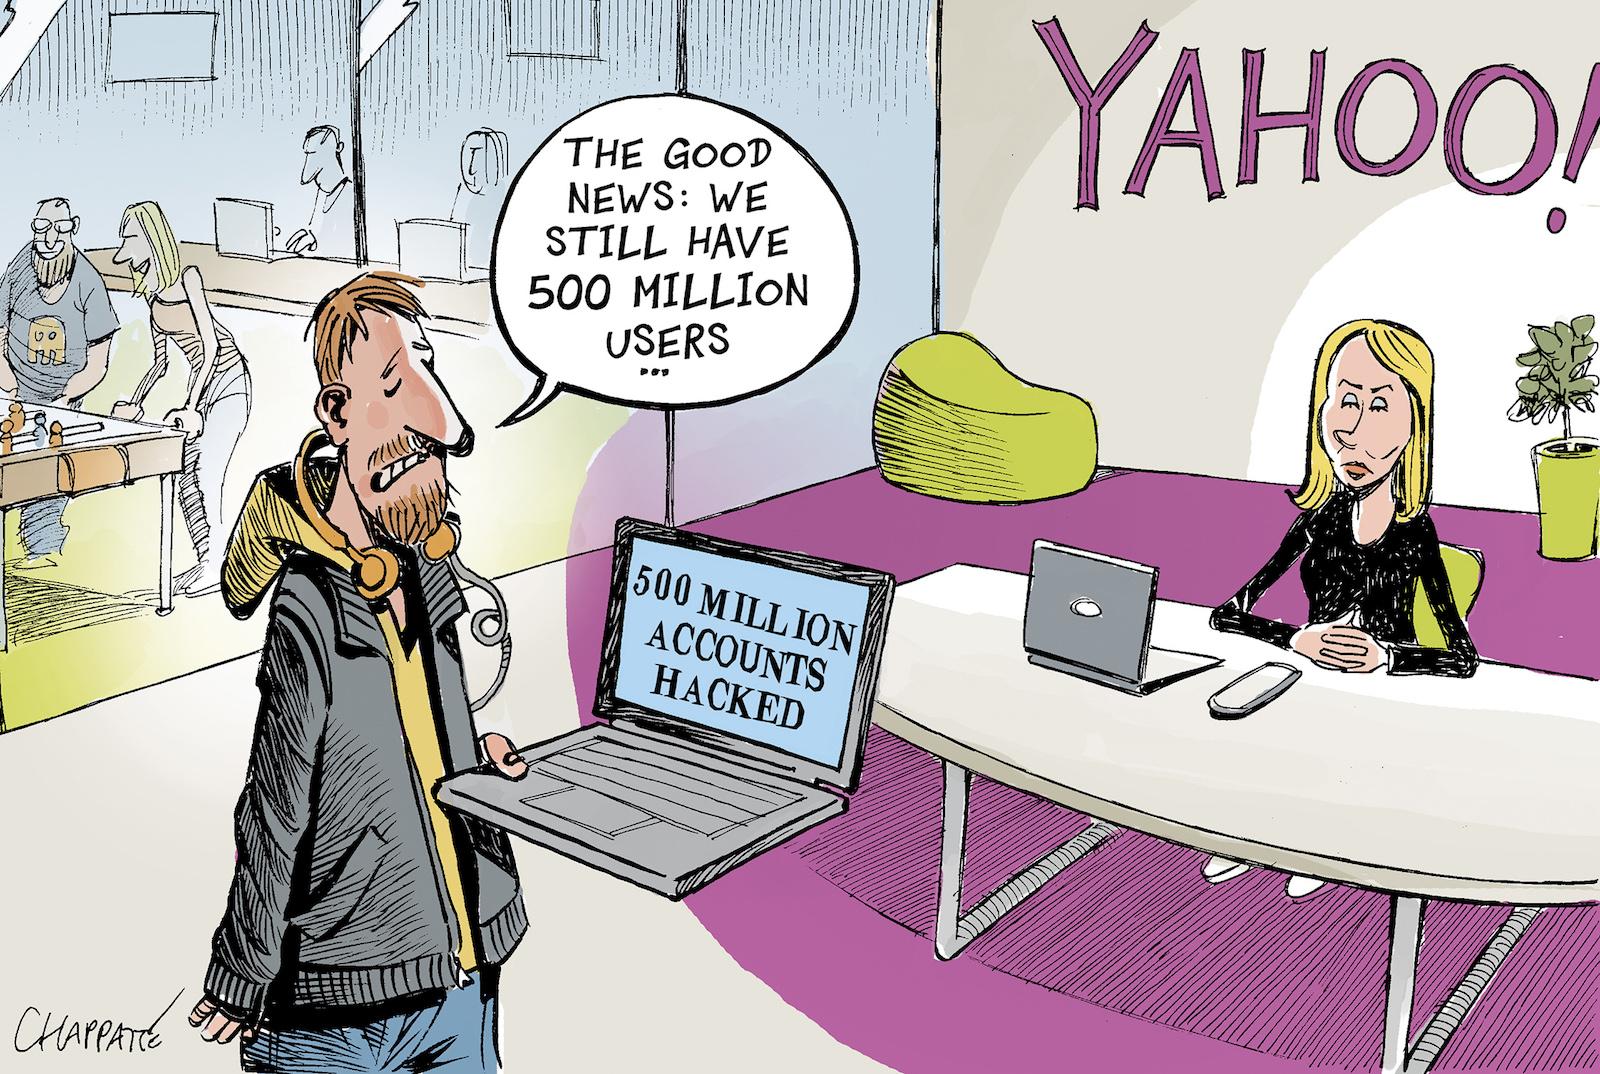 Massive data breach at Yahoo